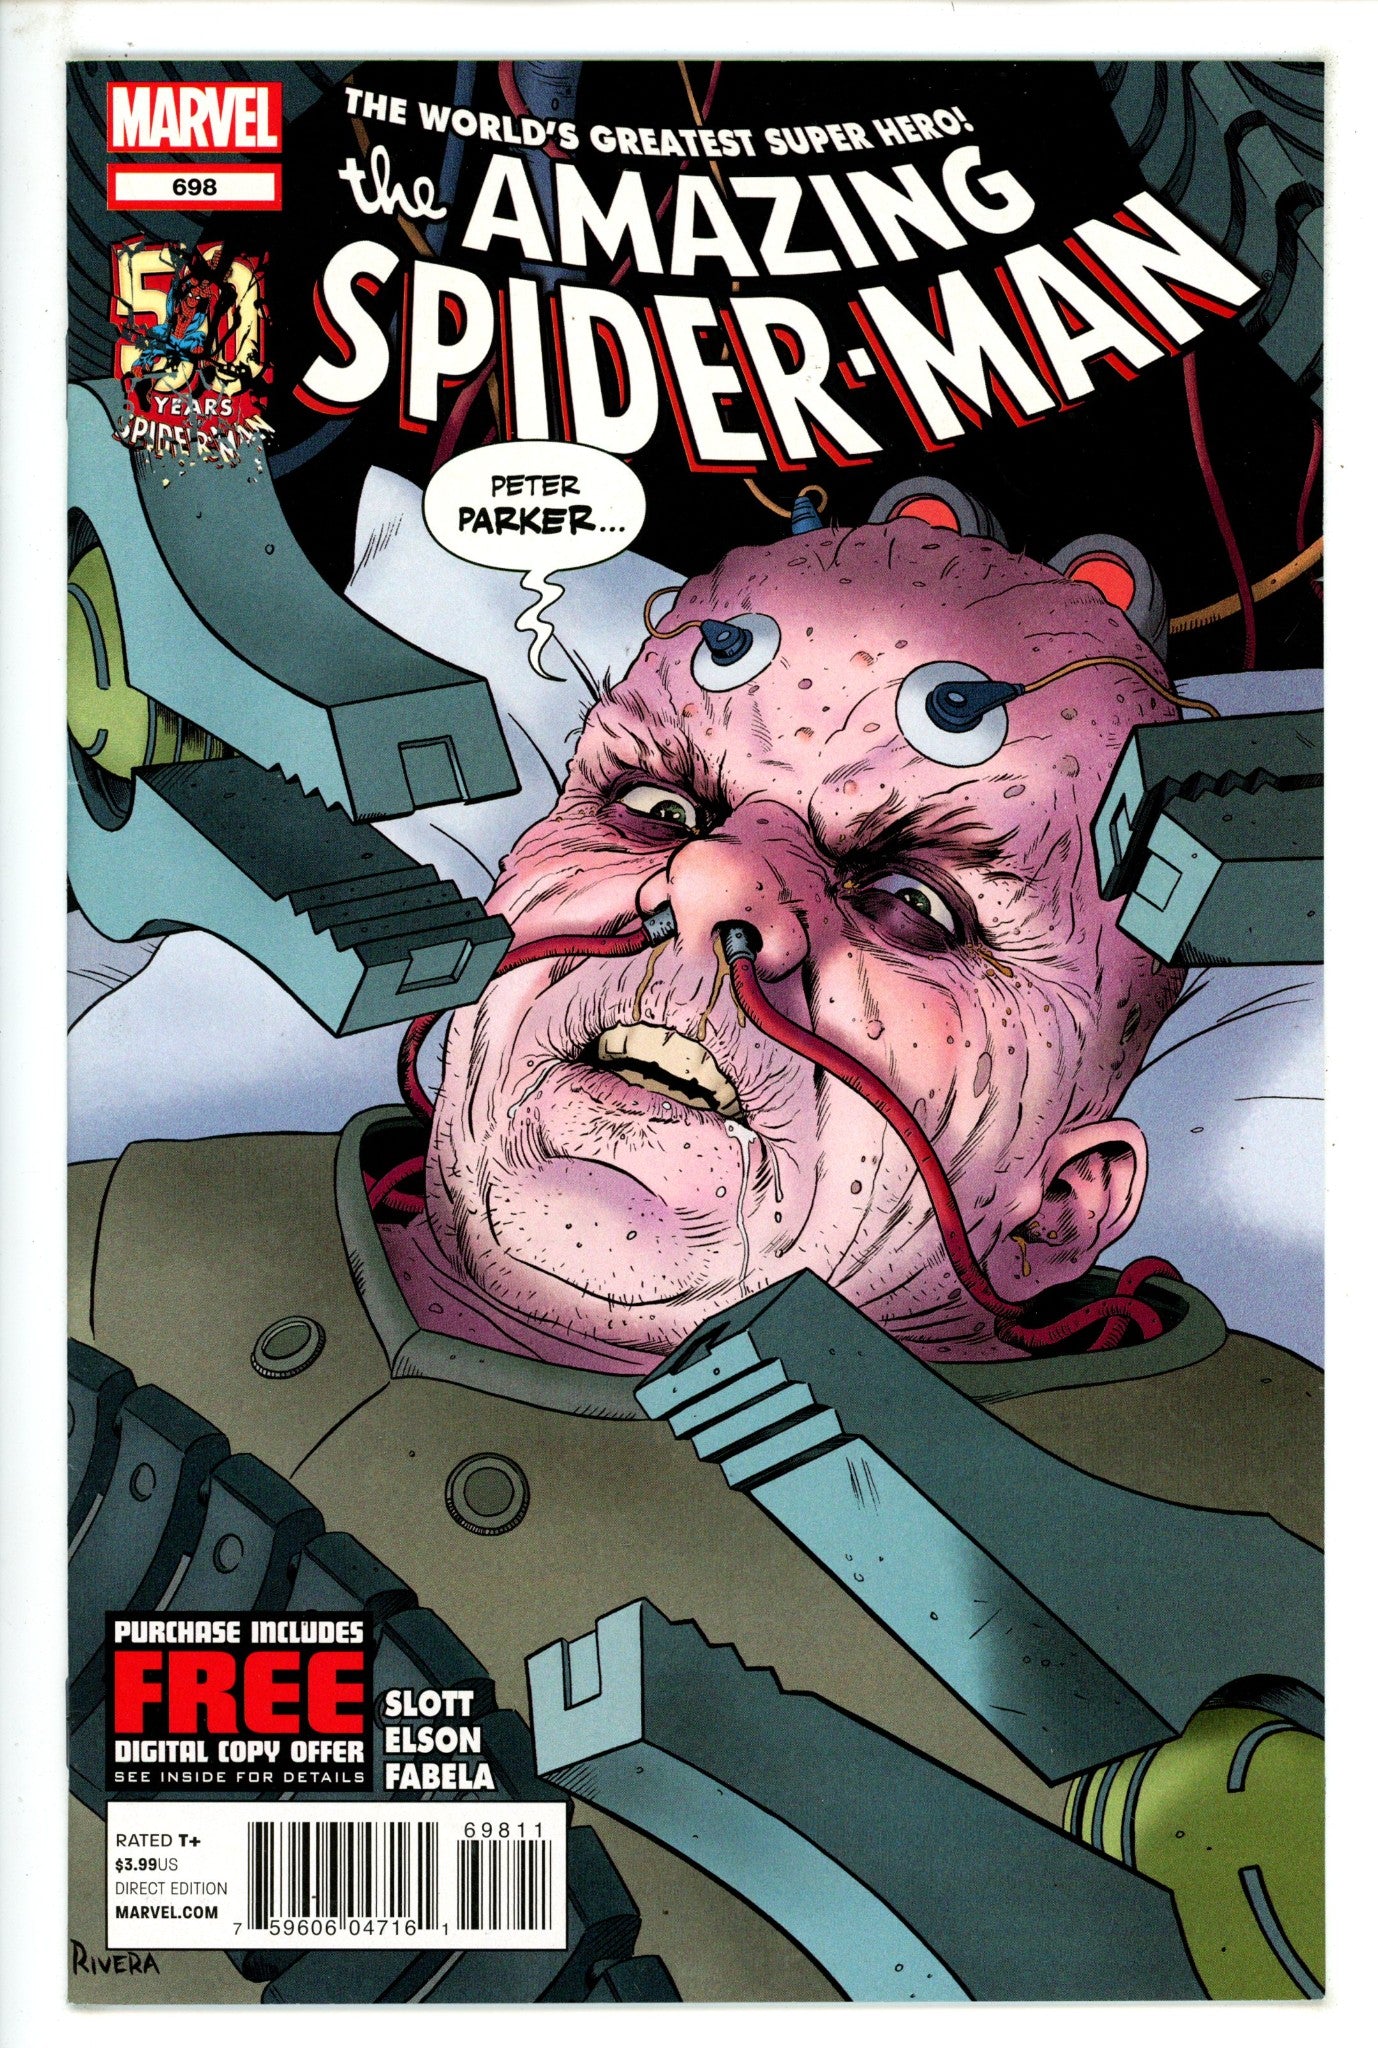 The Amazing Spider-Man Vol 2 698 High Grade (2013) 